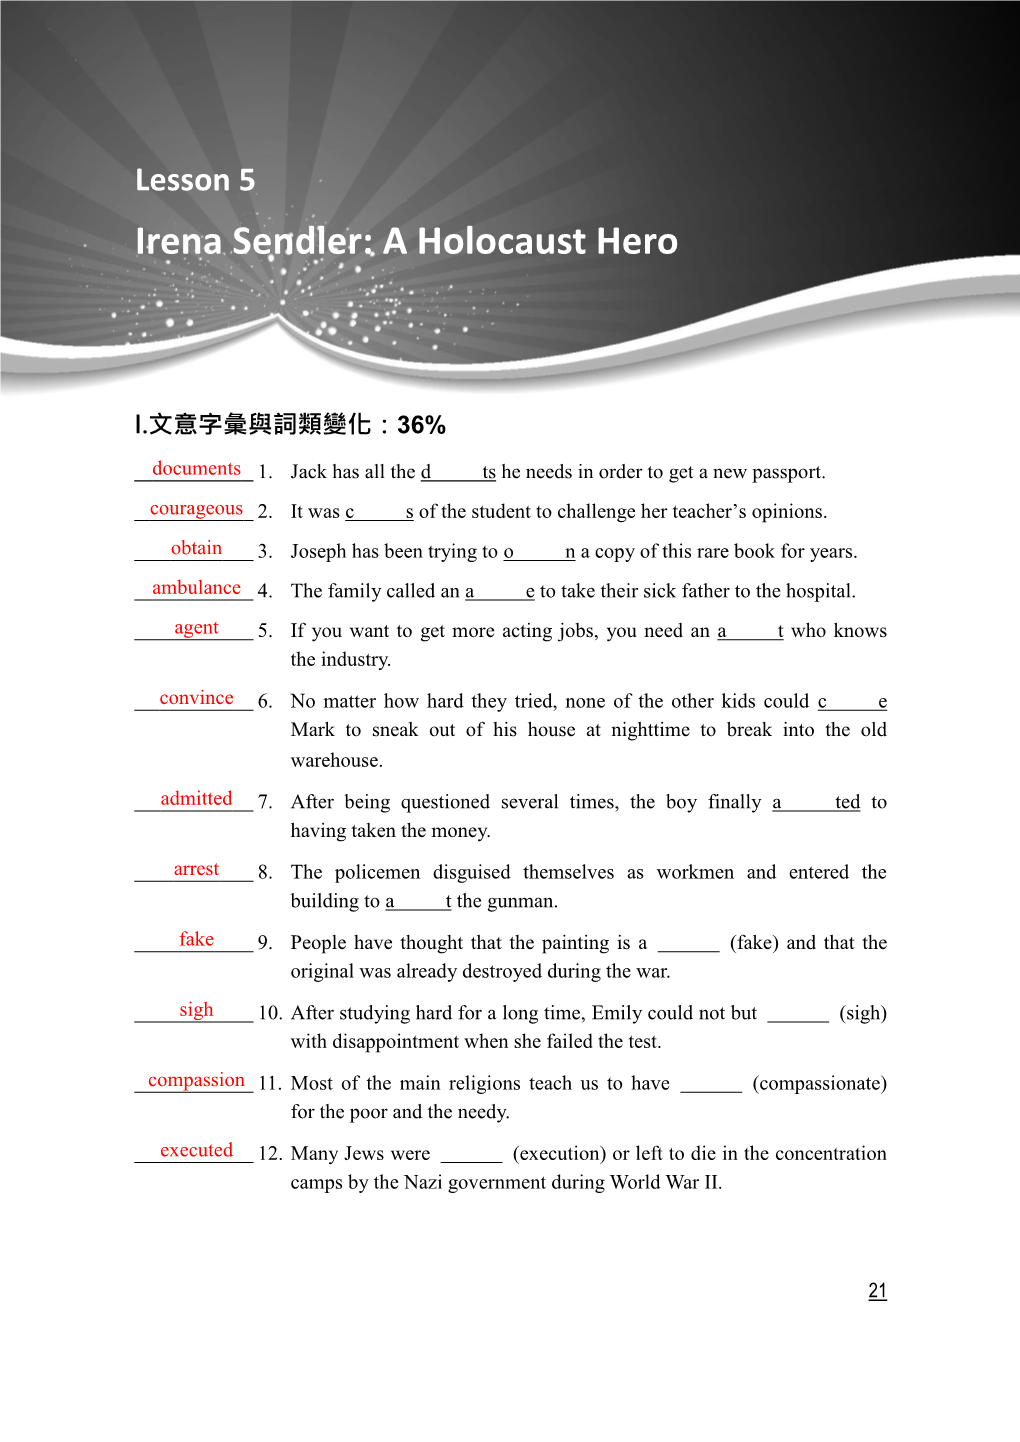 Irena Sendler: a Holocaust Hero